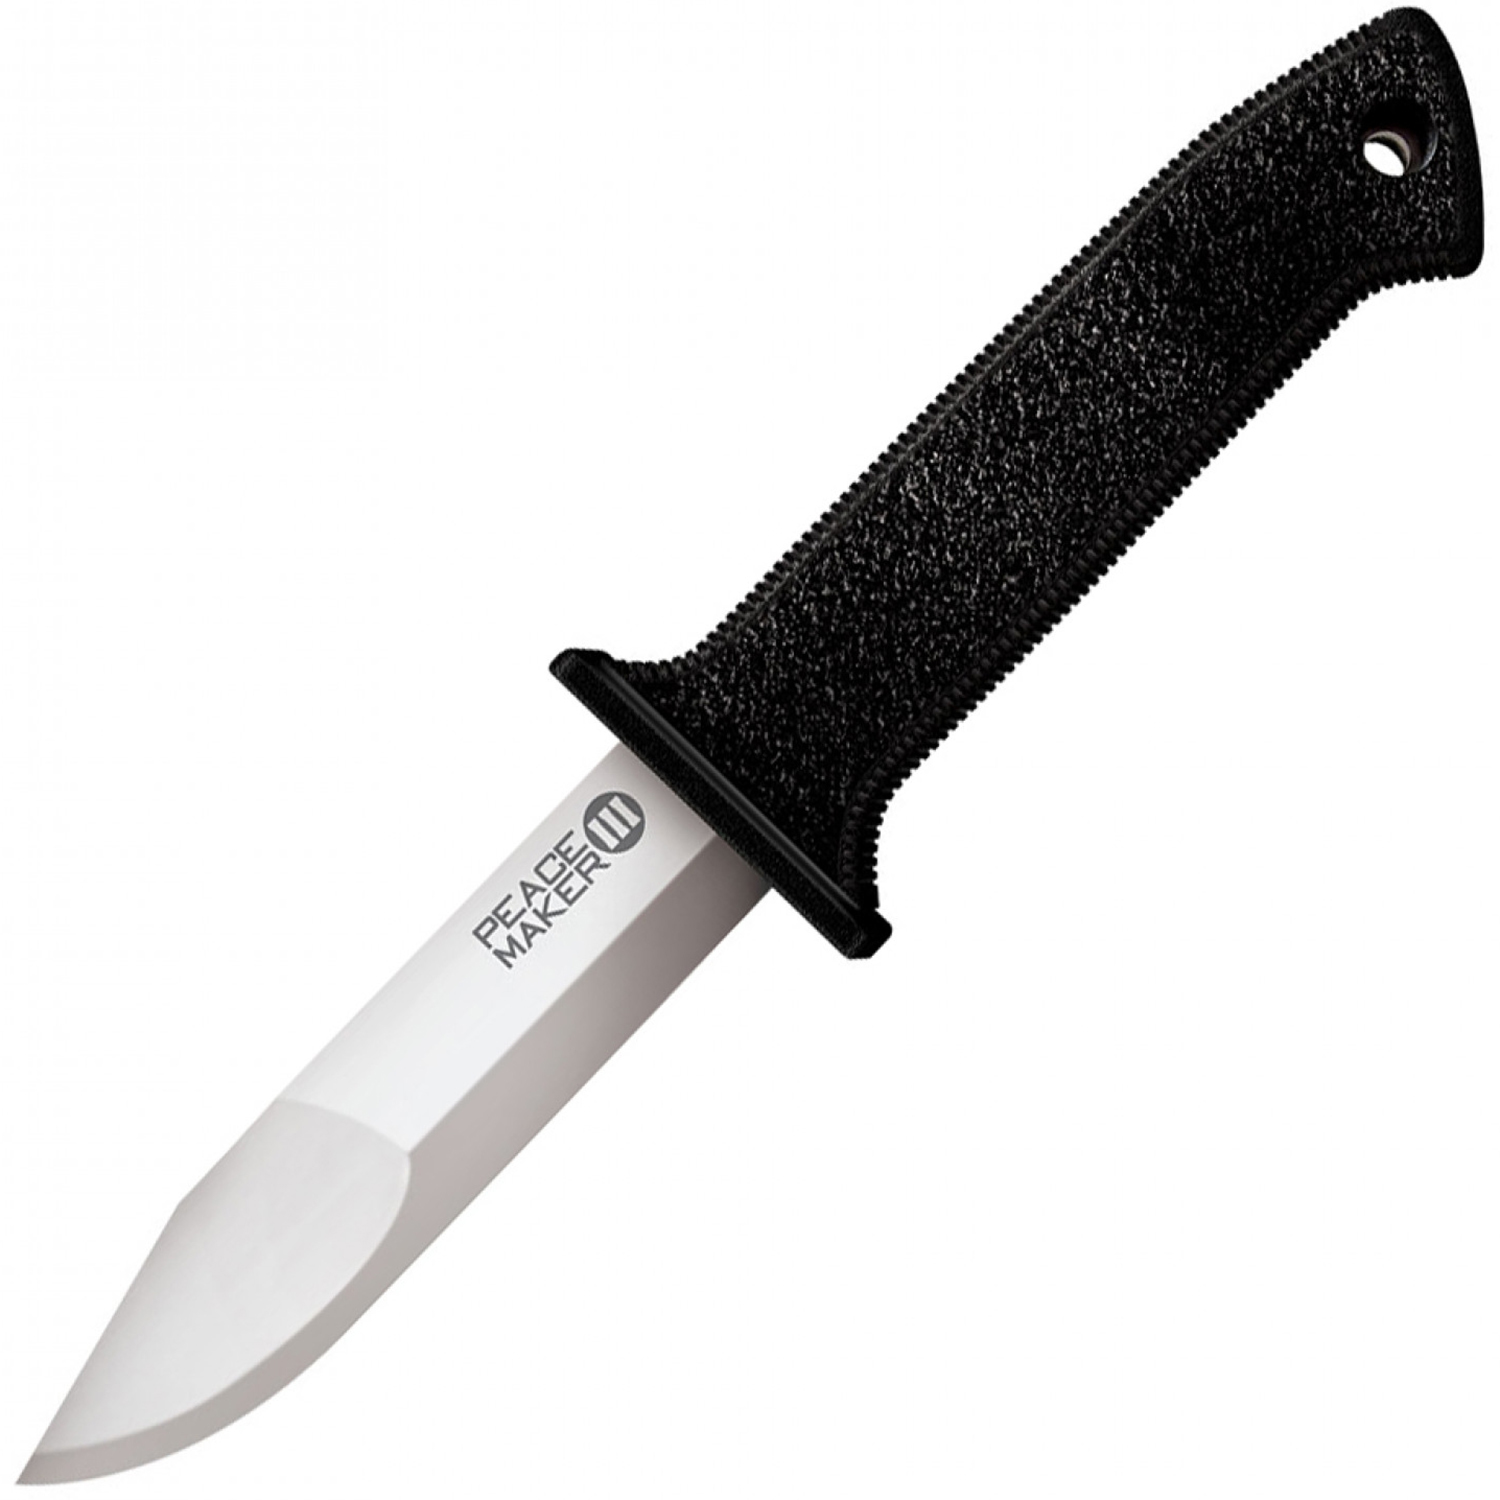 Нож Cold Steel Peace Maker III 20PBS, сталь 4116, рукоять резина нож cold steel outdoorsman lite 20ph сталь 4116 рукоять резина